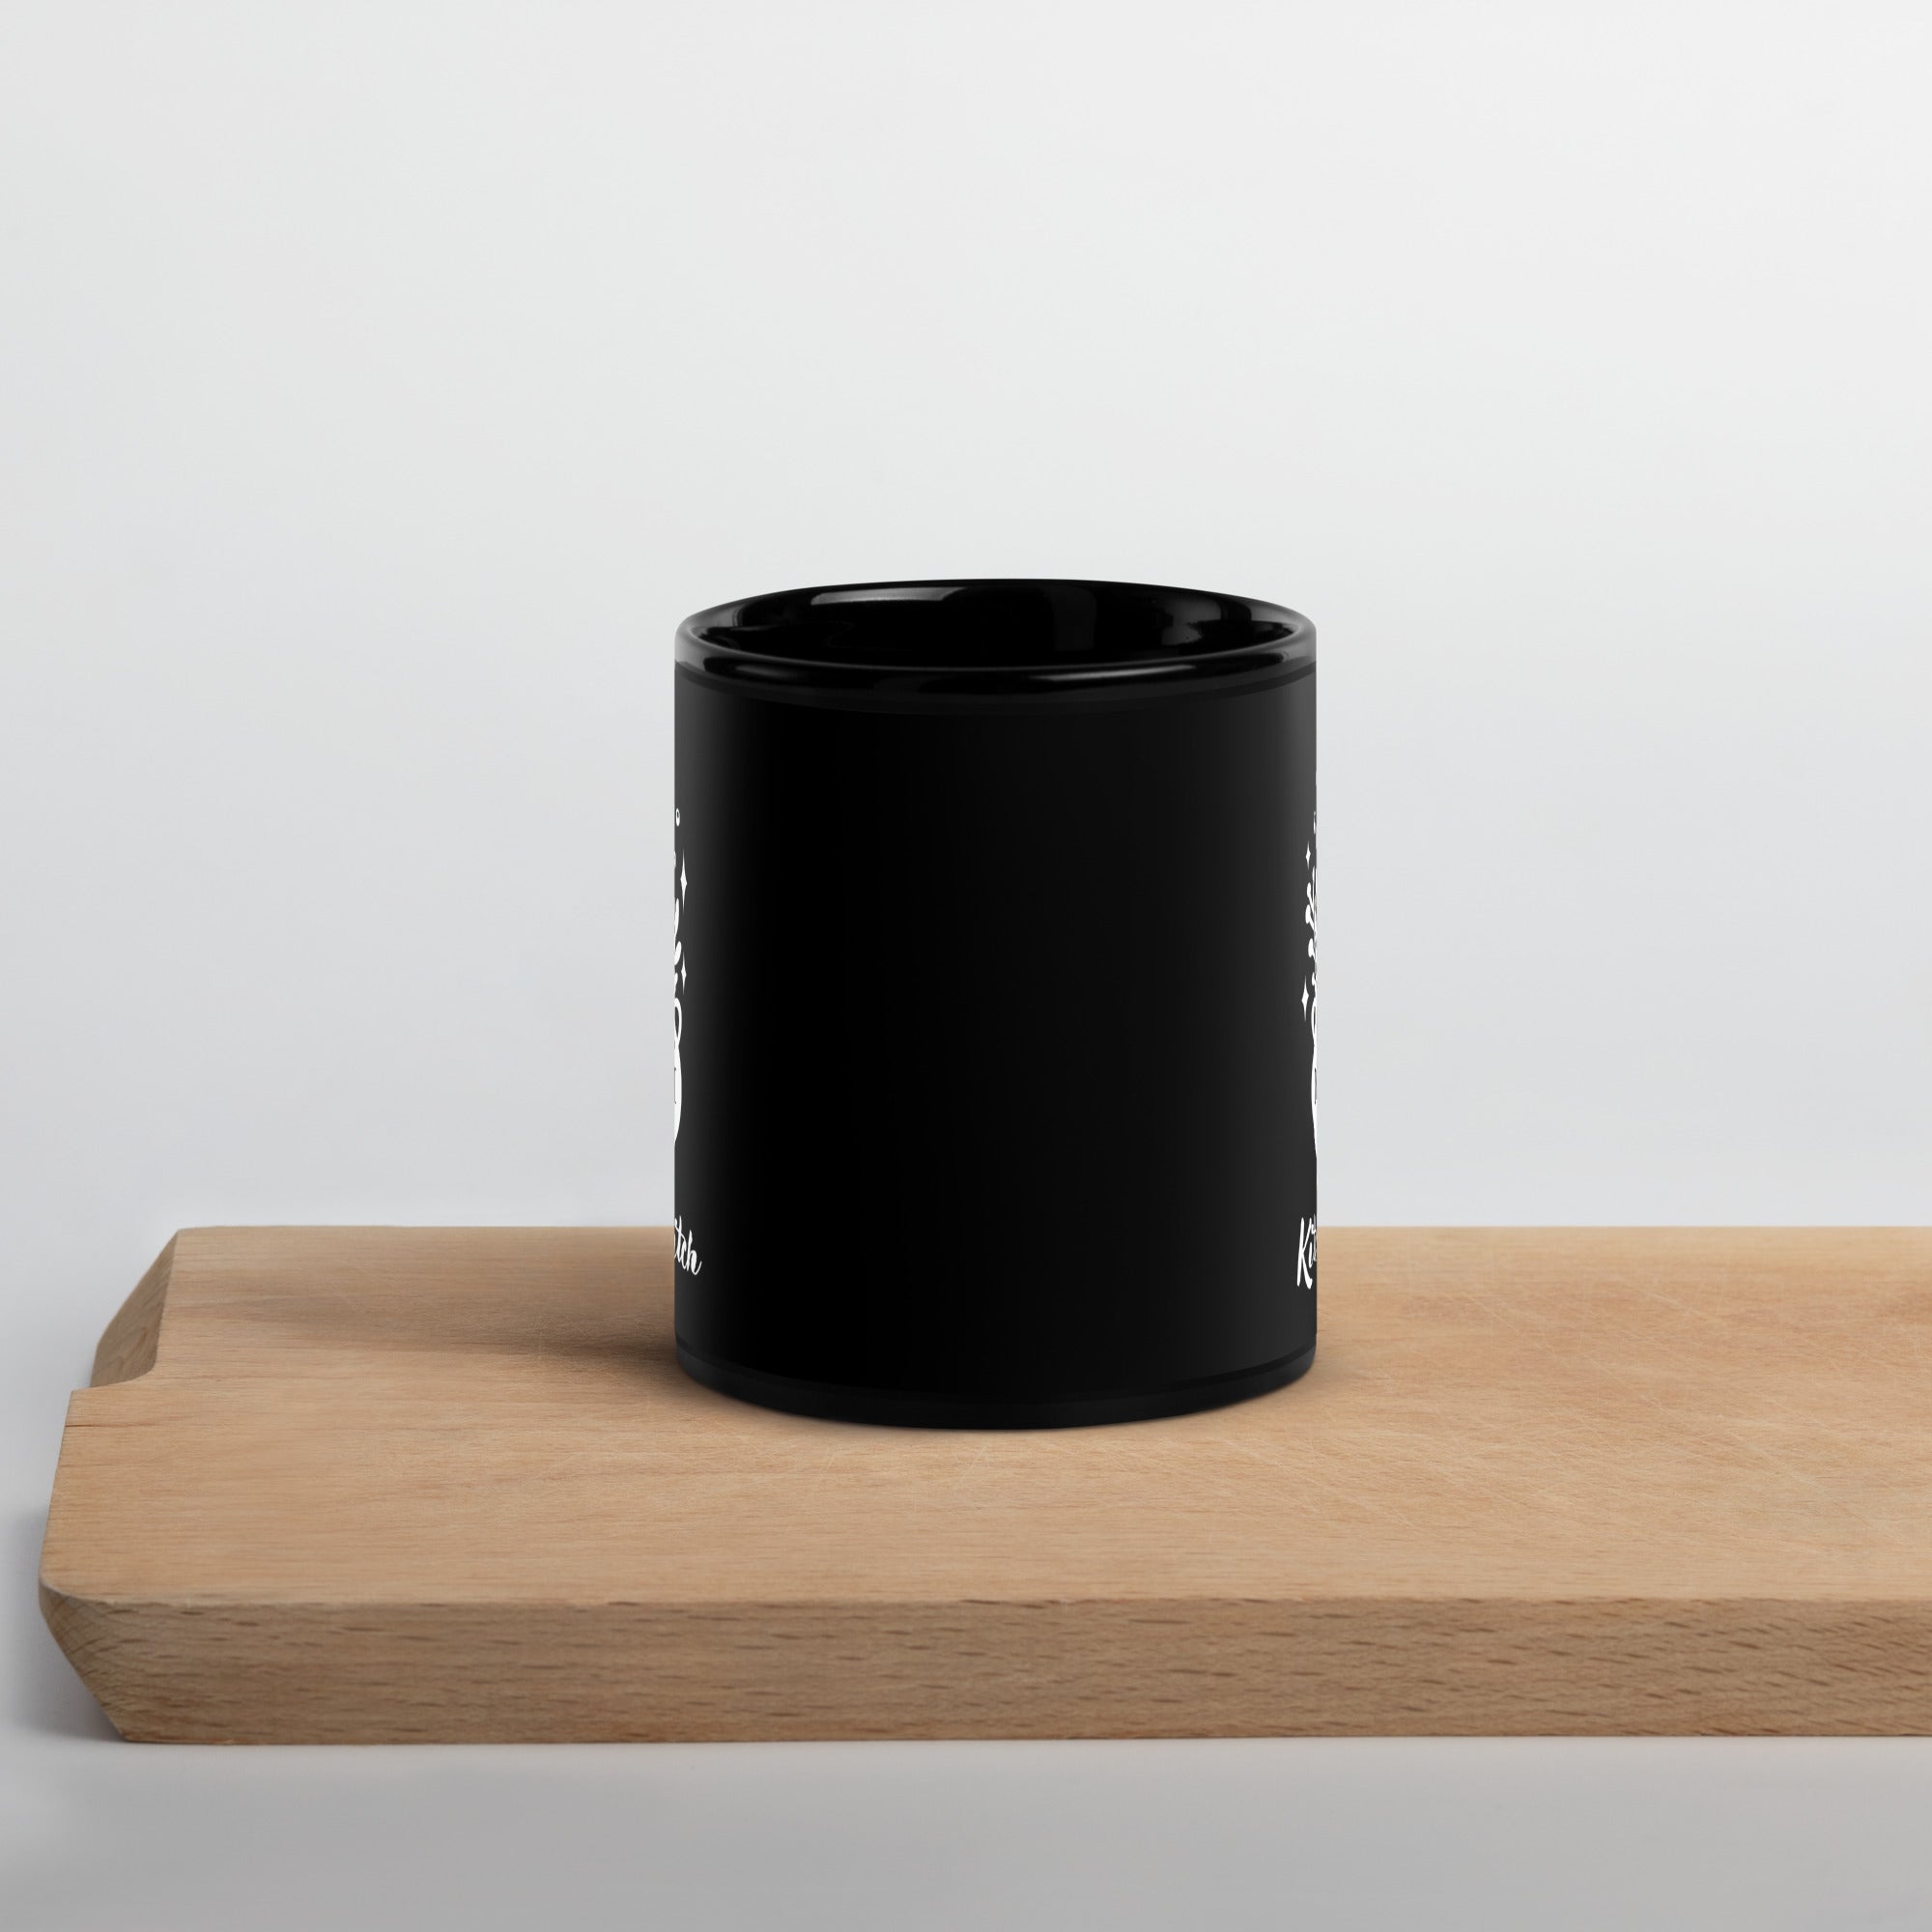 Kitchen Witch - Black Glossy Mug